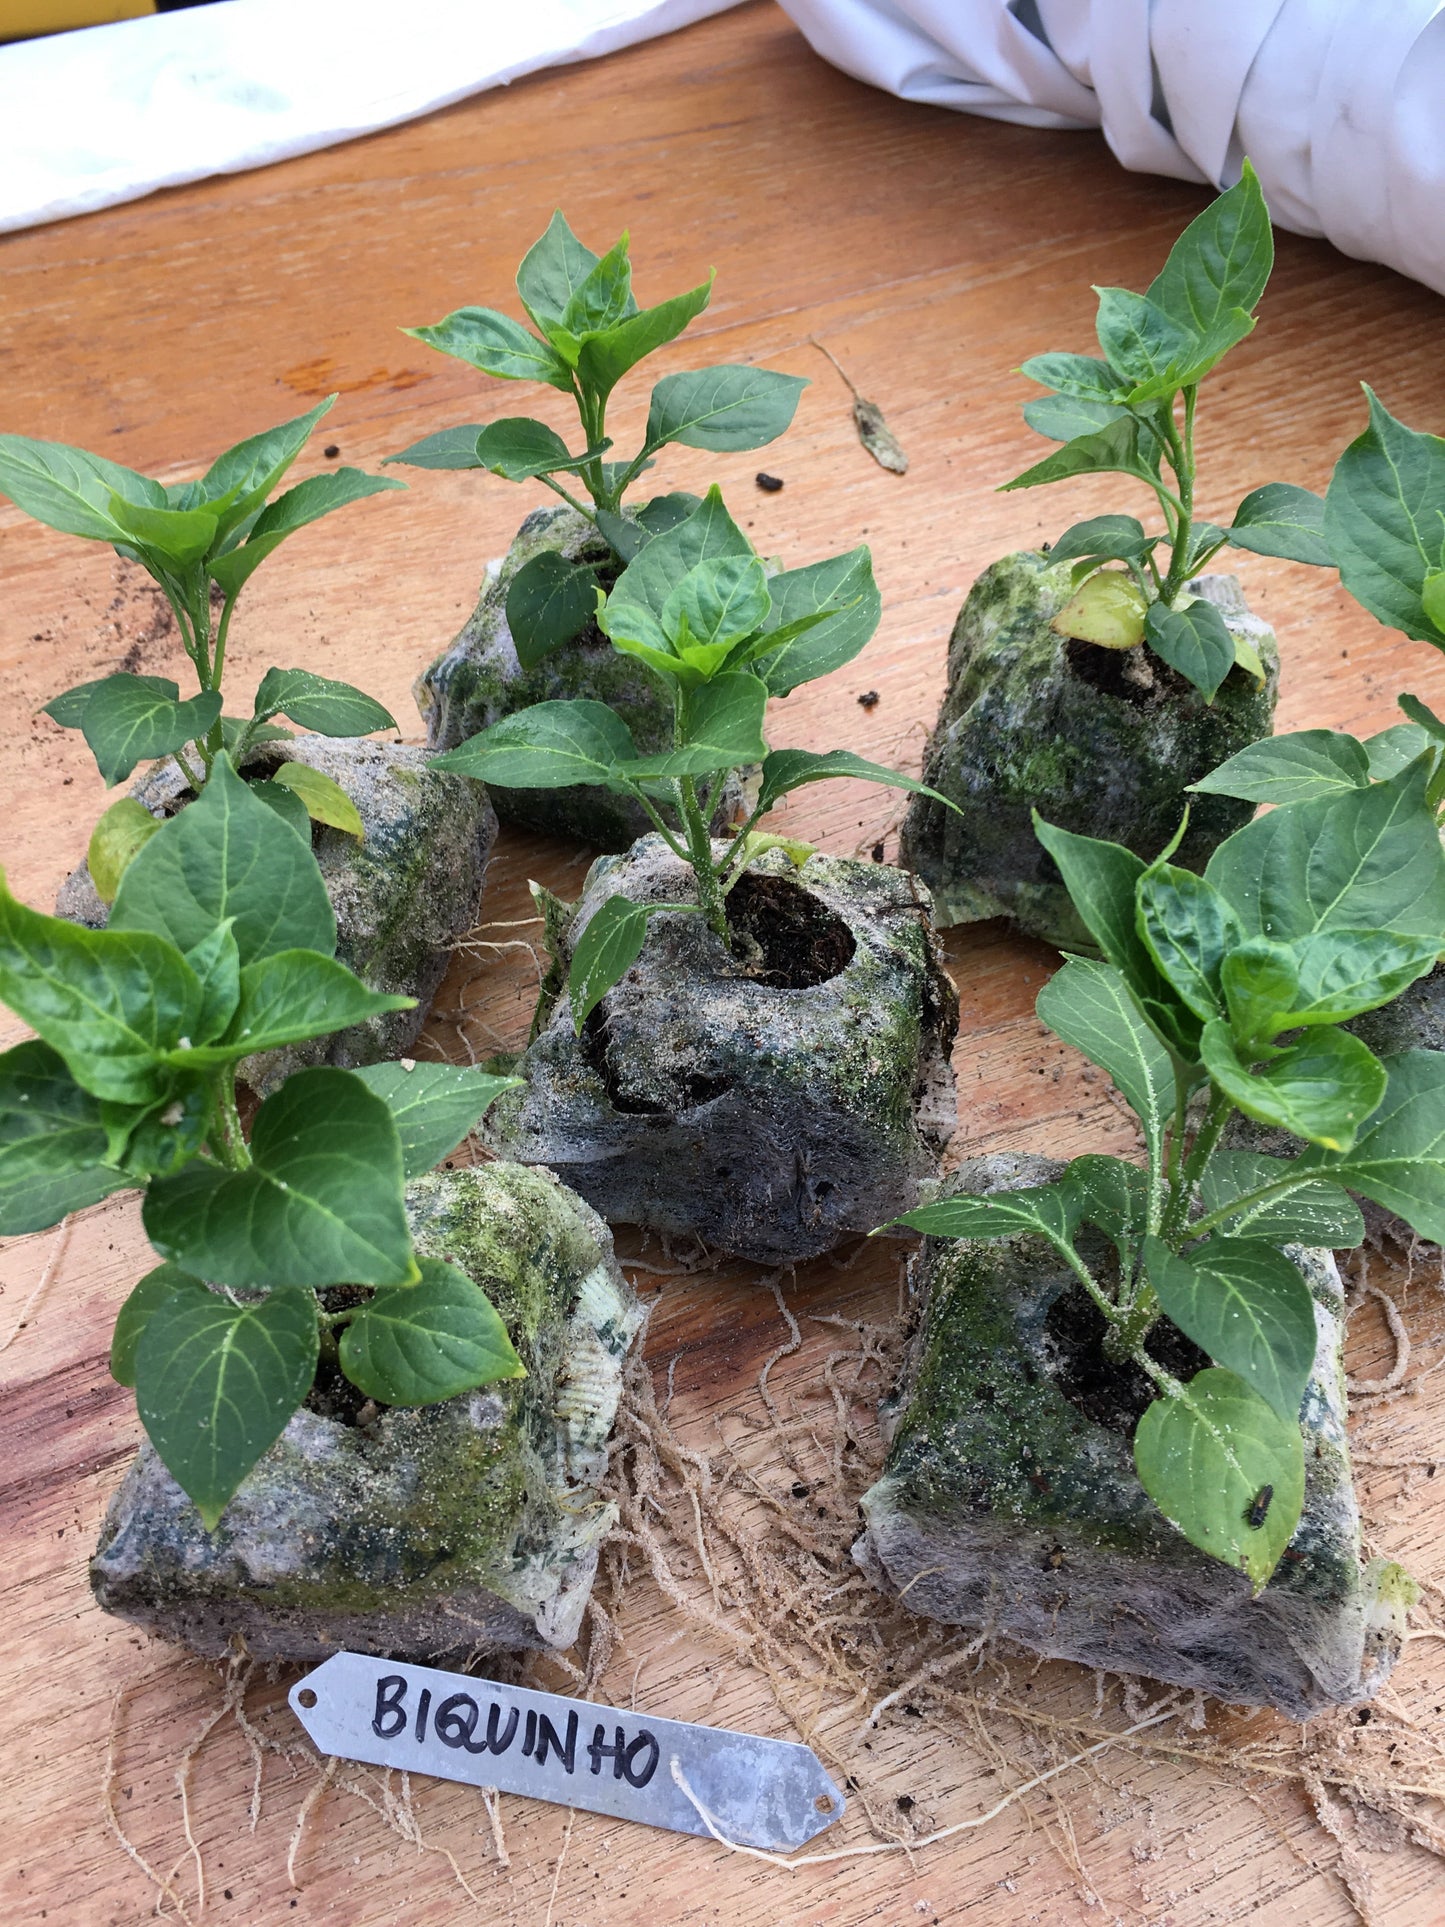 Biquinho chilli plants in coco coir plugs